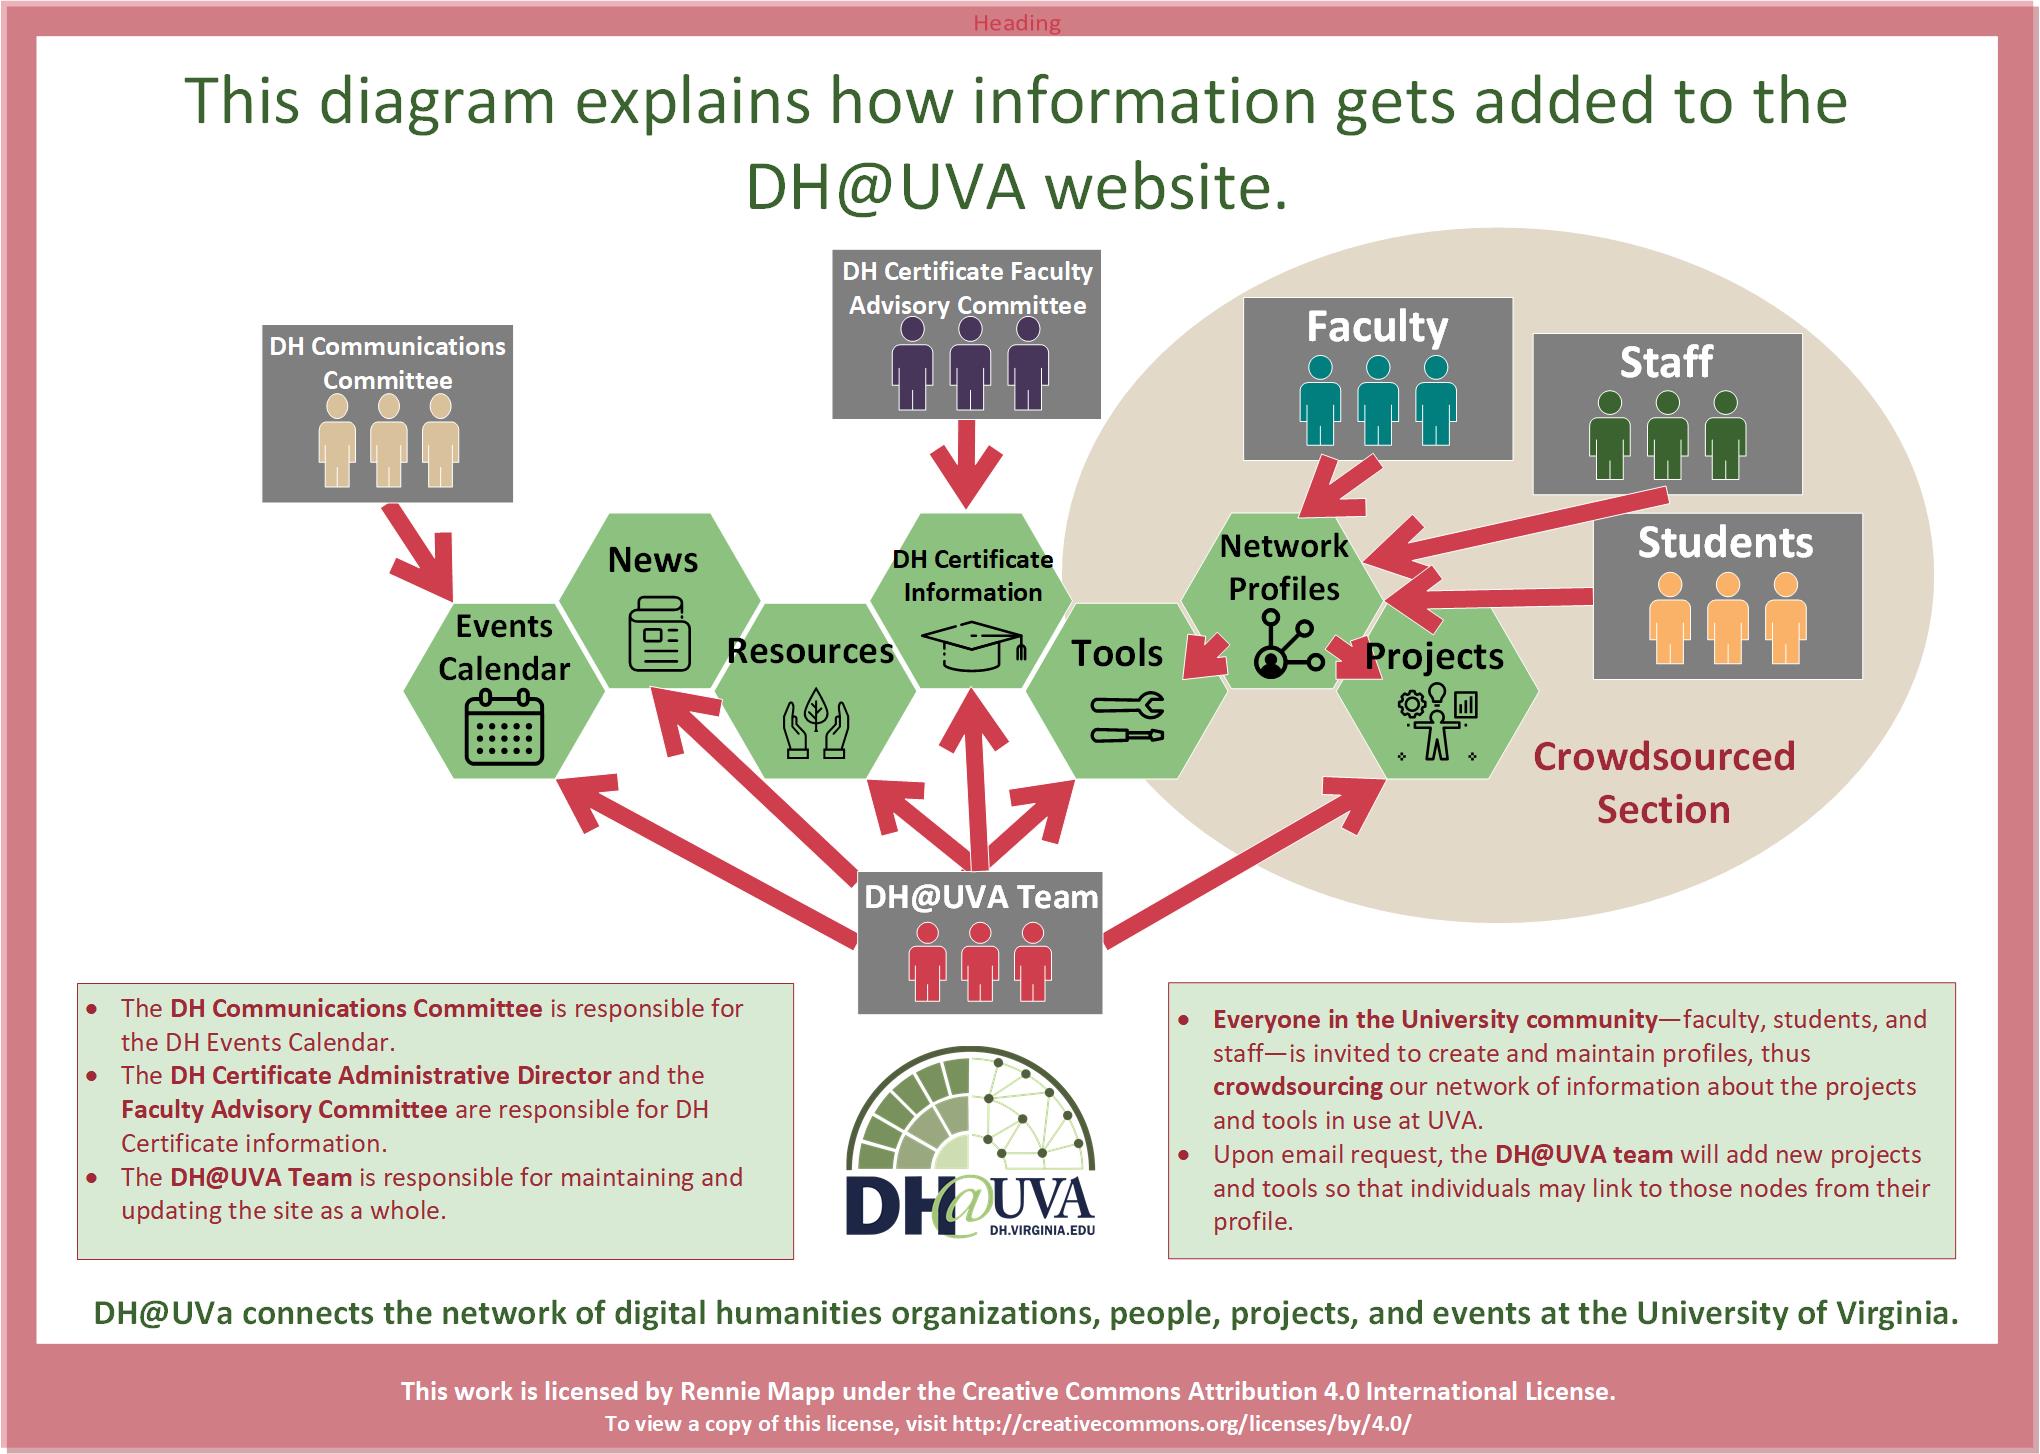 Flow chart of DH@UVA website organization